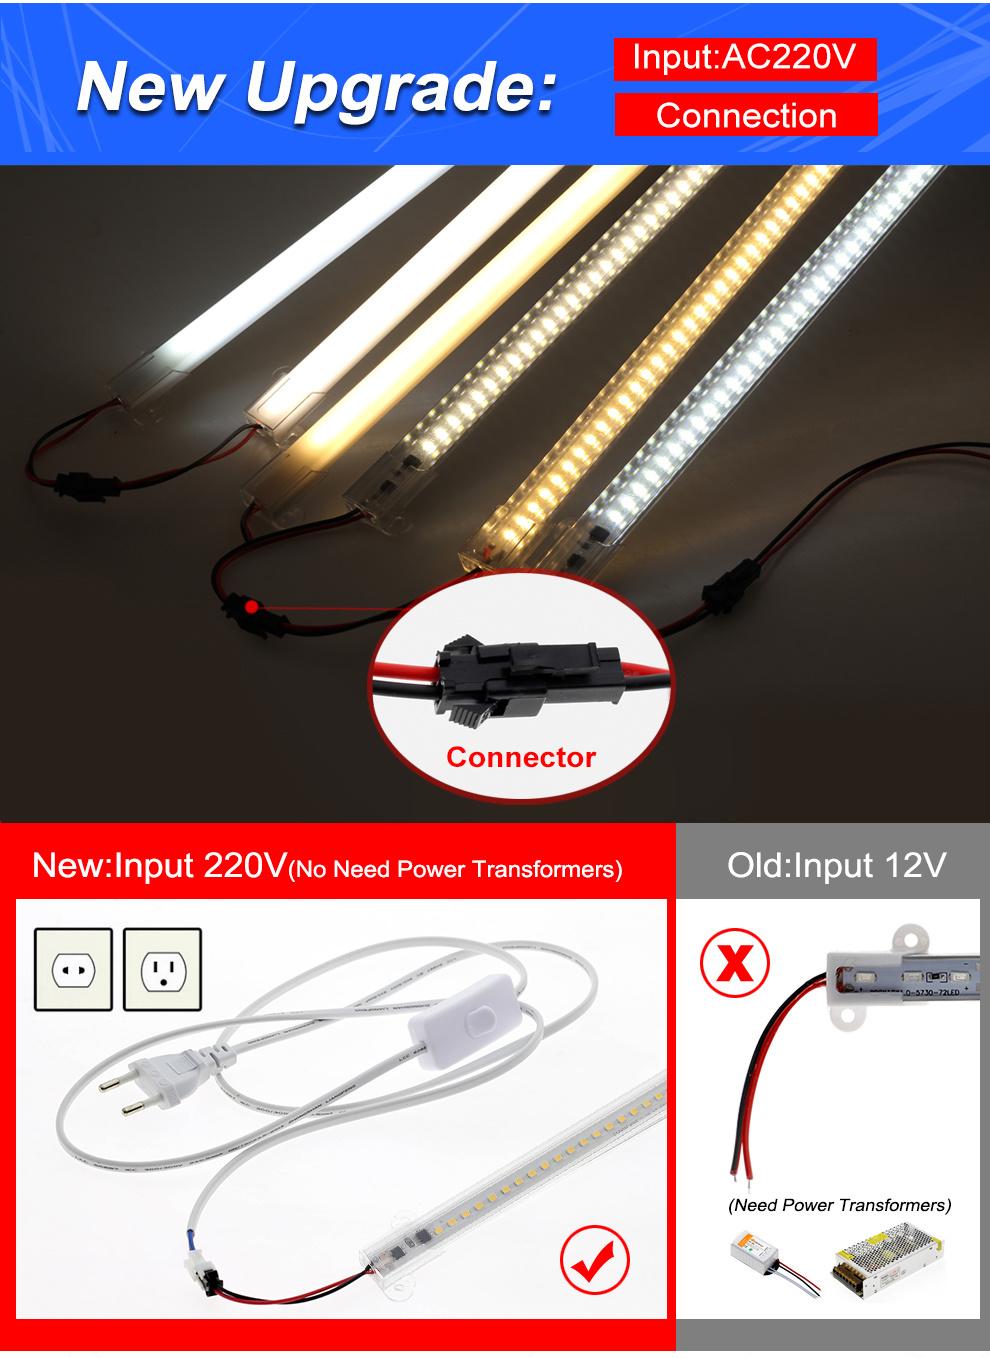 LED Tube Light AC220V 50cm 72LEDs High Brightness Night Bar 2835 Strip Energy Saving Lamp for Home Kitchen Cabinet Wall Decor